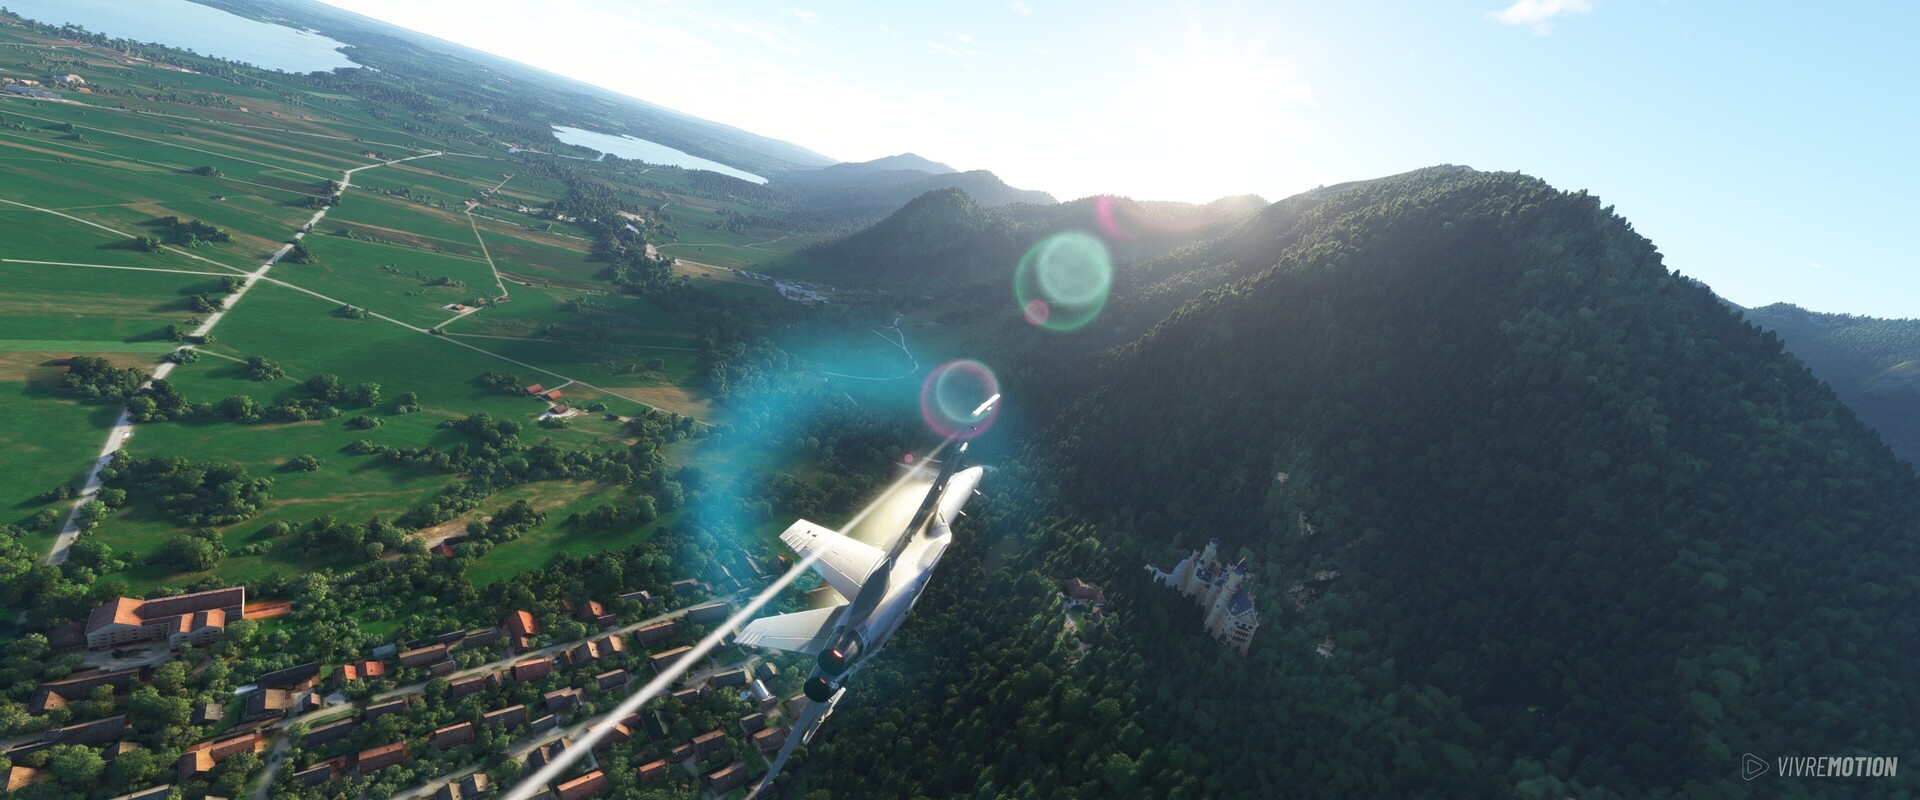 Germany Schloss Neuschwanstein - Boeing F/A-18 Super Hornet - Microsoft Flight Simulator - VIVRE-MOTION